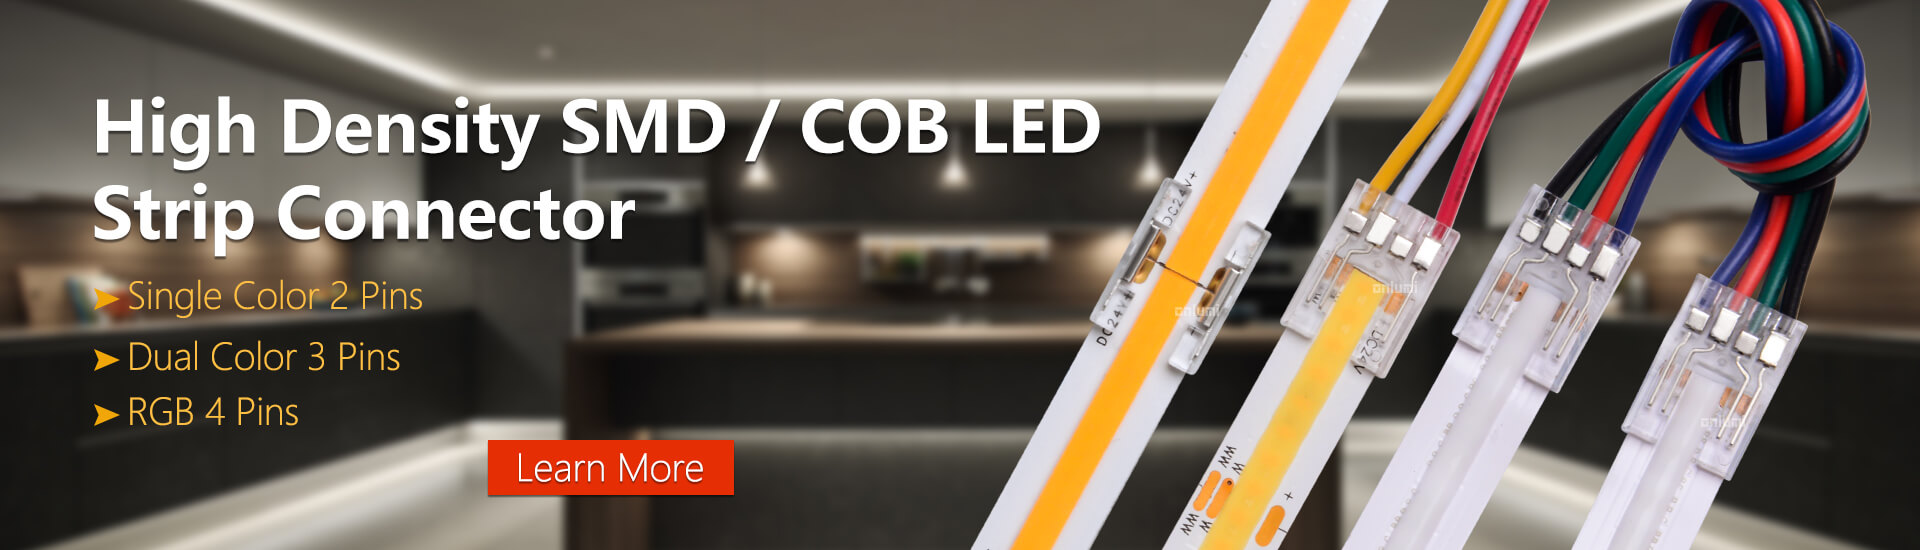 Banner-COB LED Strip Connector